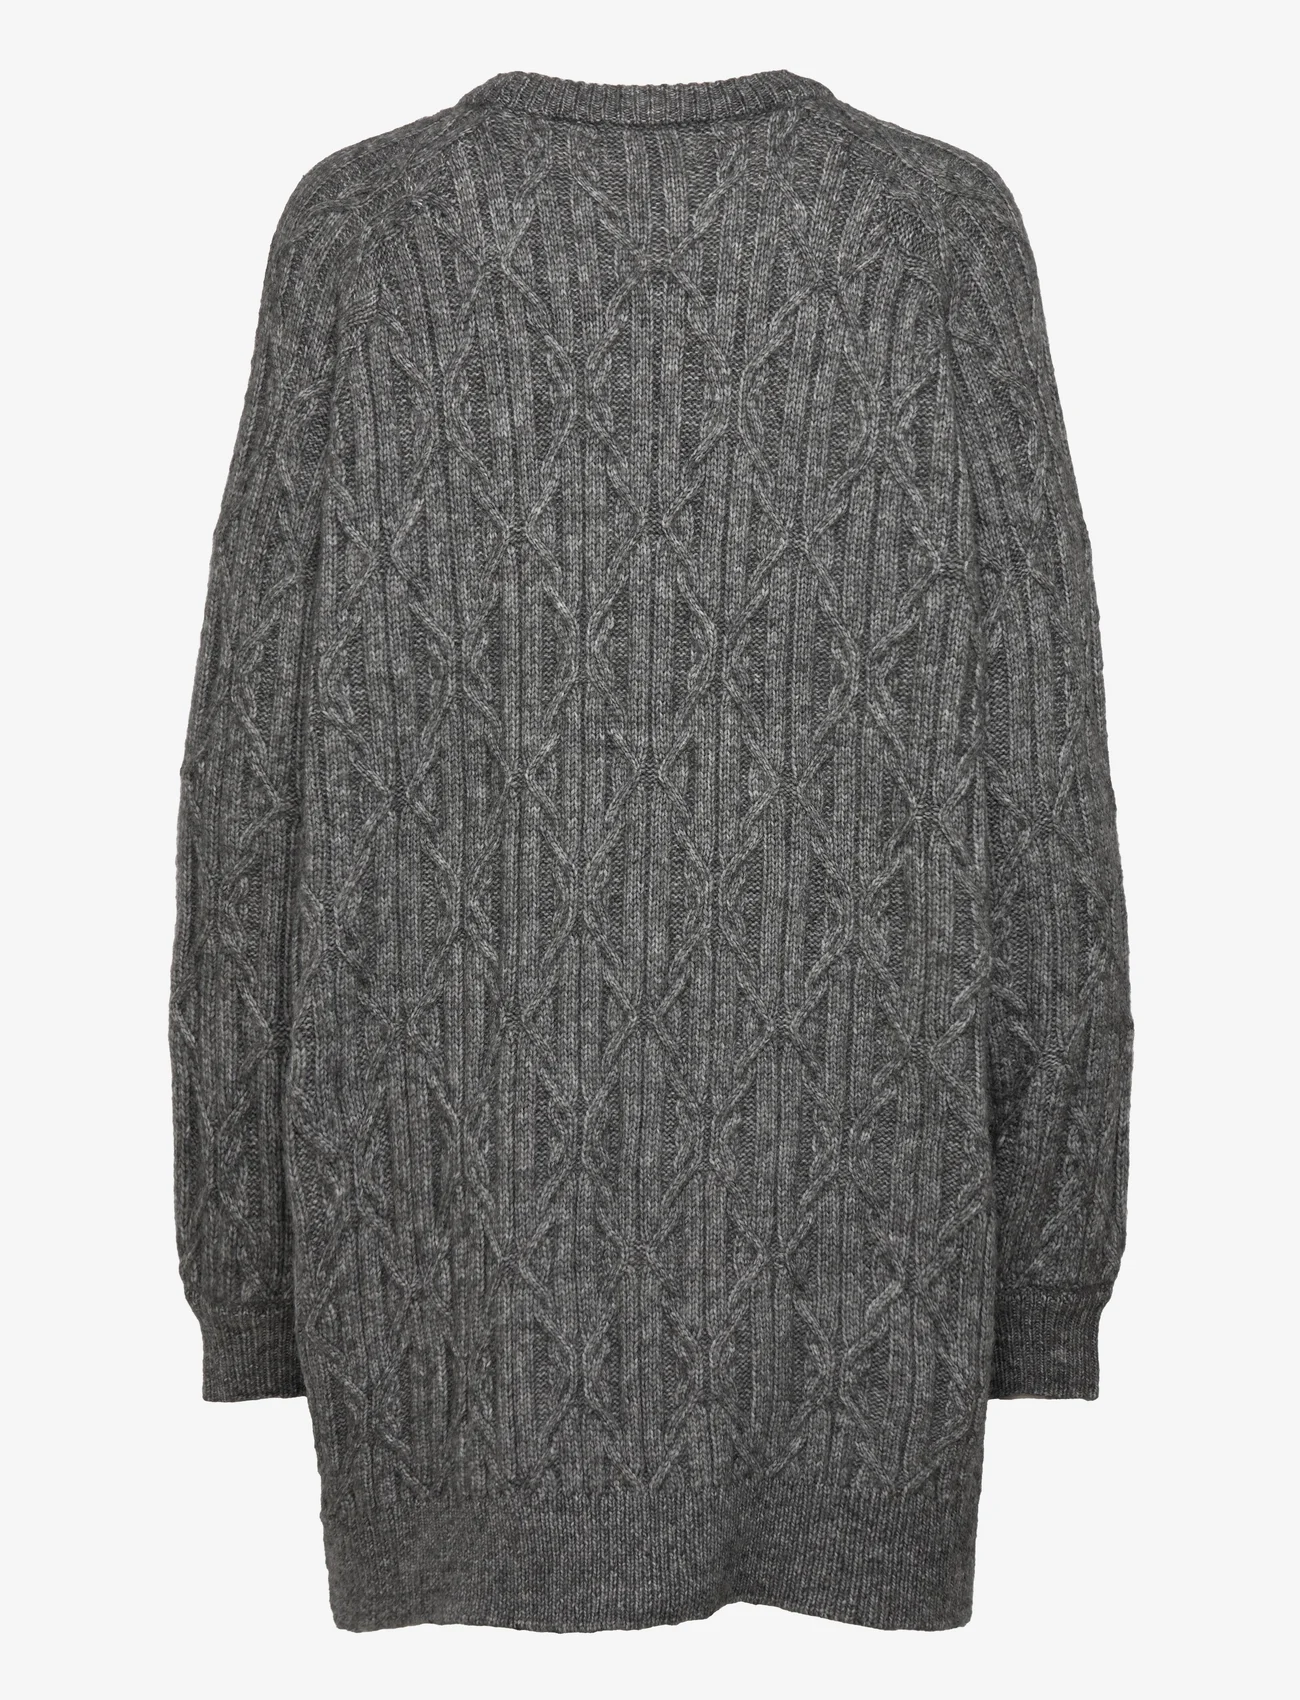 Moshi Moshi Mind - vision knit cable - swetry - dark grey melange - 1